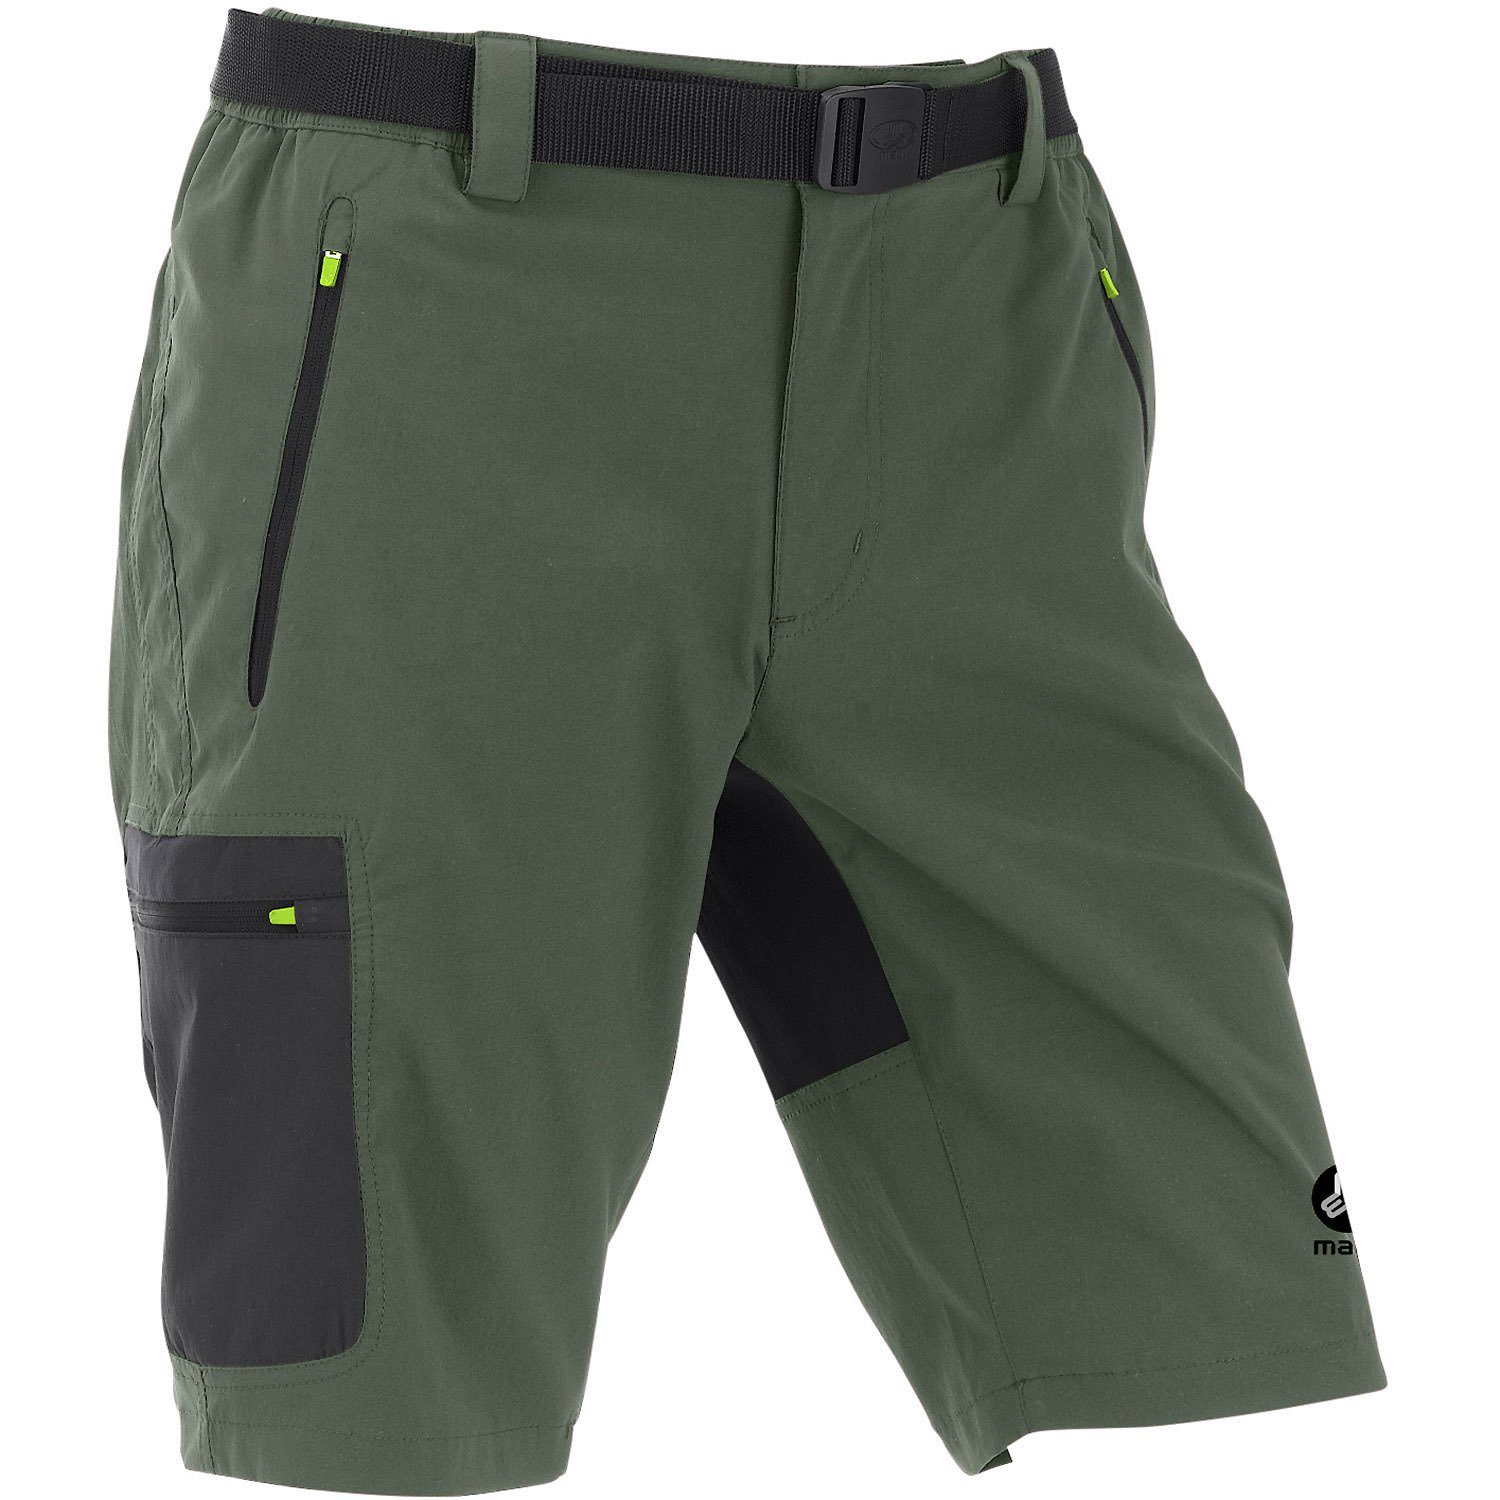 Maul Sport® Funktionsshorts Shorts Bermuda II elastic Lorbeere Doldenhorn